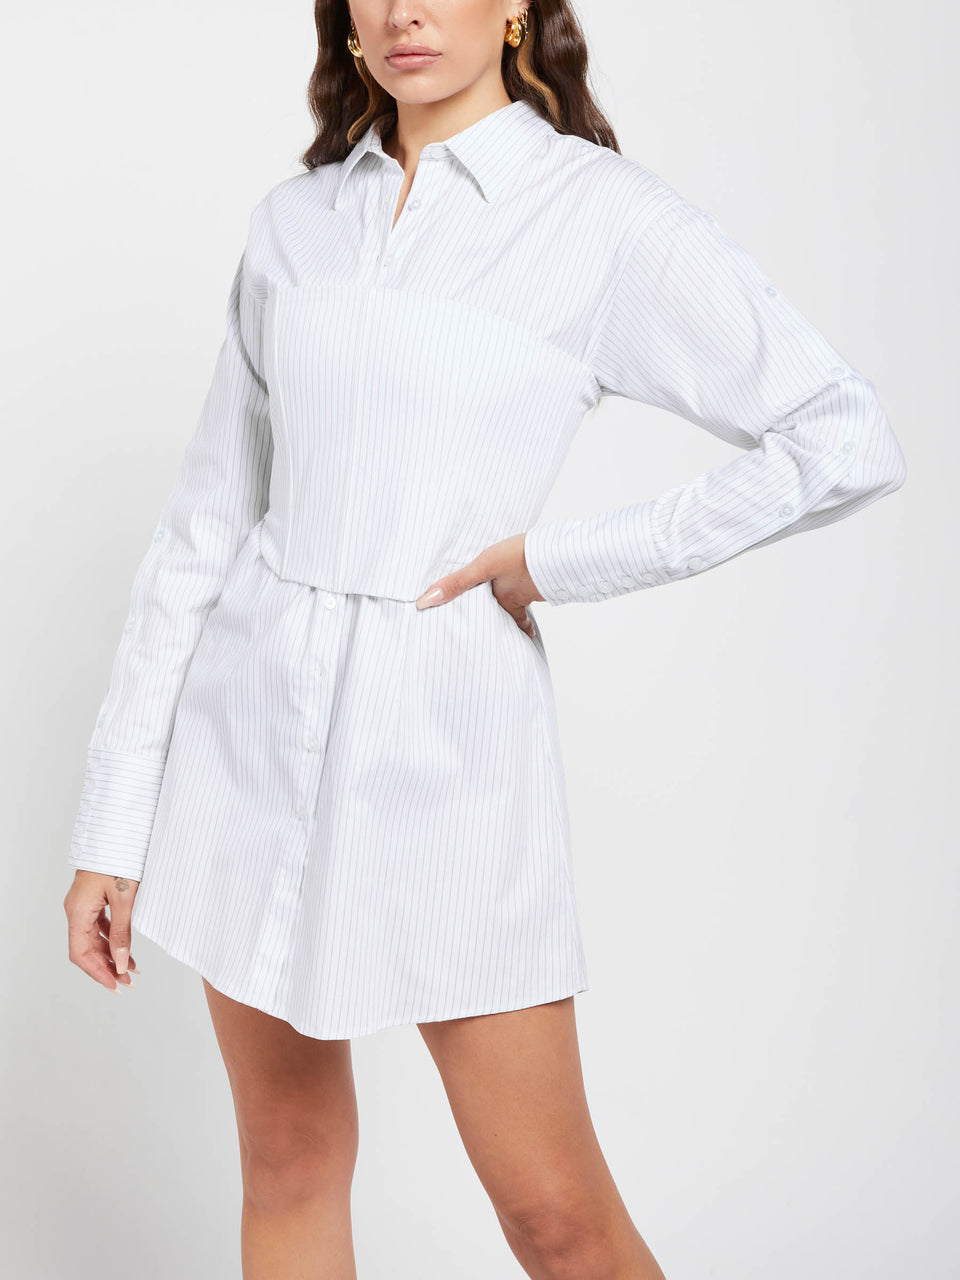 steele_gianni_corset_button_up_dress_white